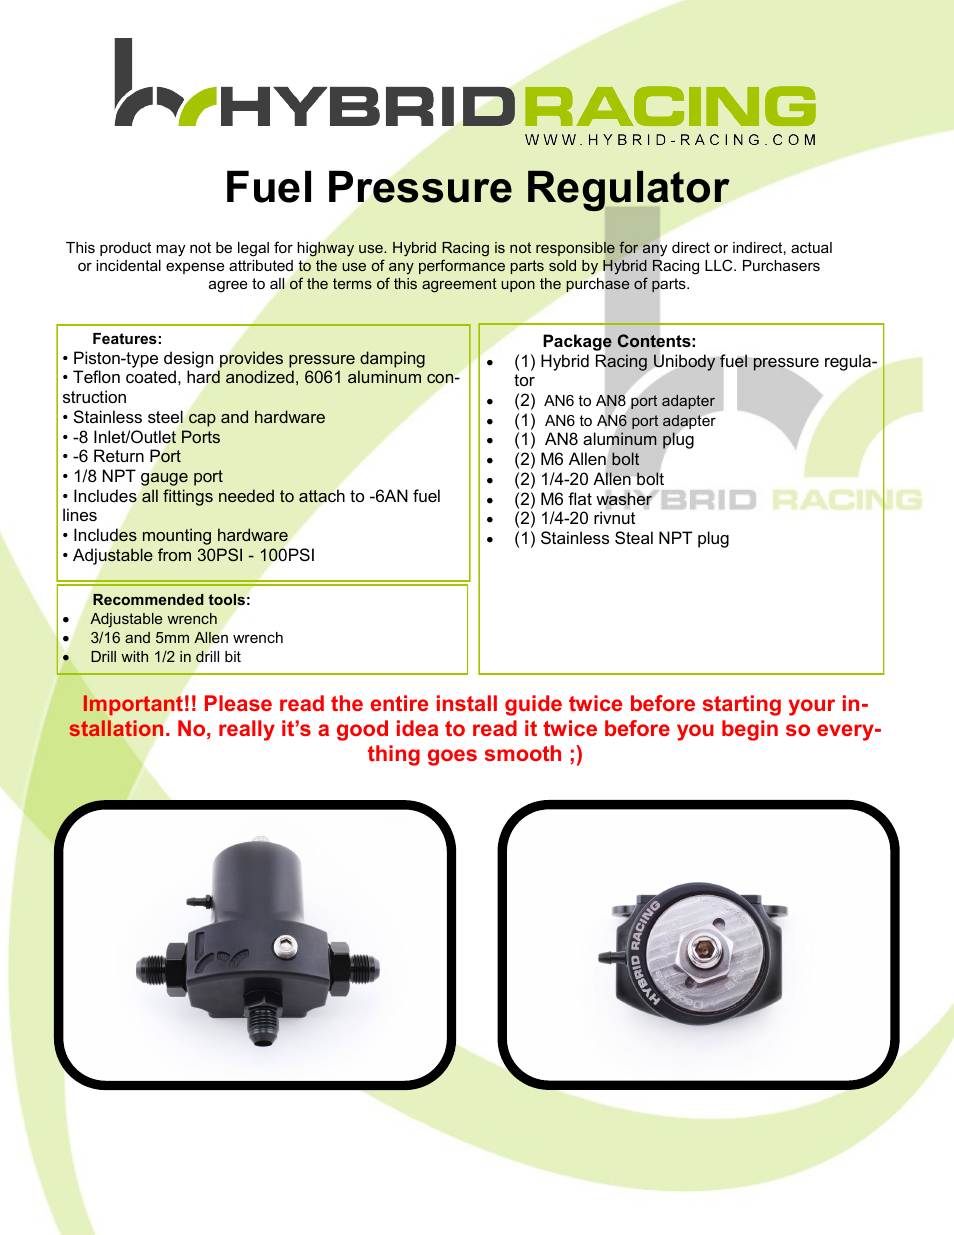 Hybrid Racing HR Unibody Fuel Pressure Regulator User Manual | 7 pages